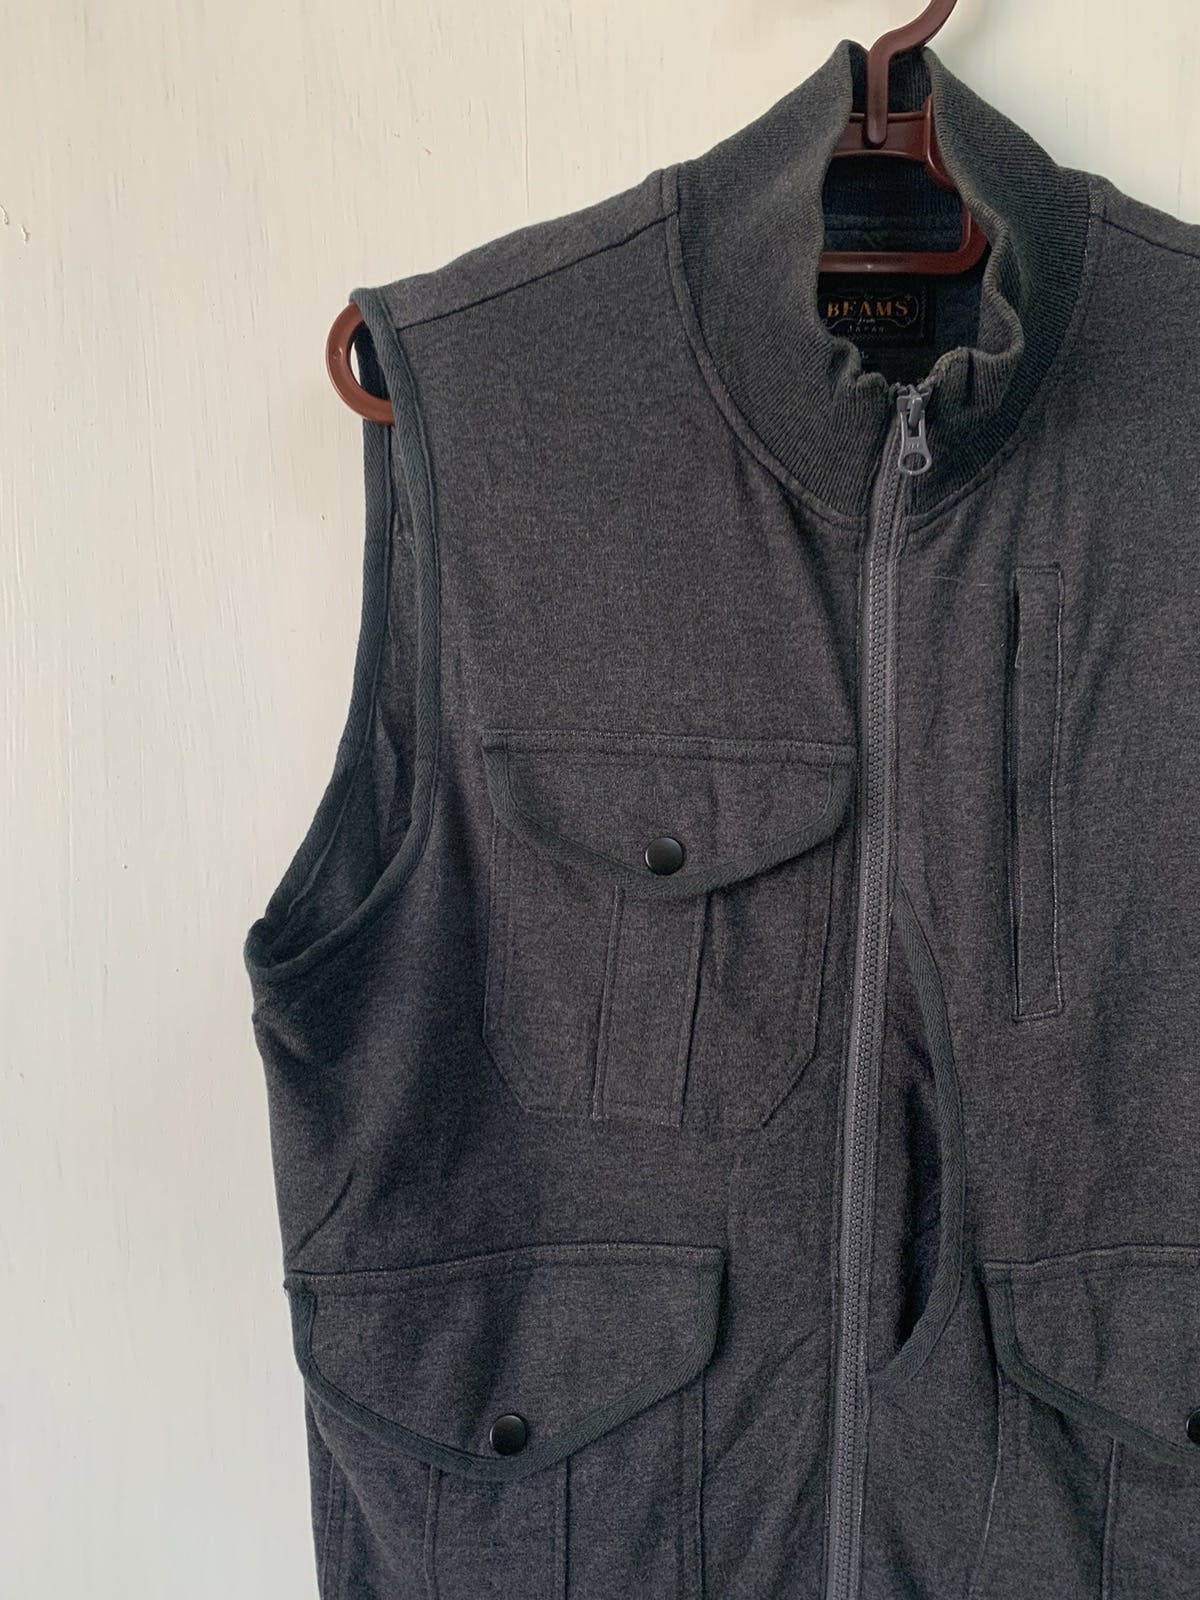 Beams Plus From Japan Sleeveles Jacket/Vest Multipockets - 3